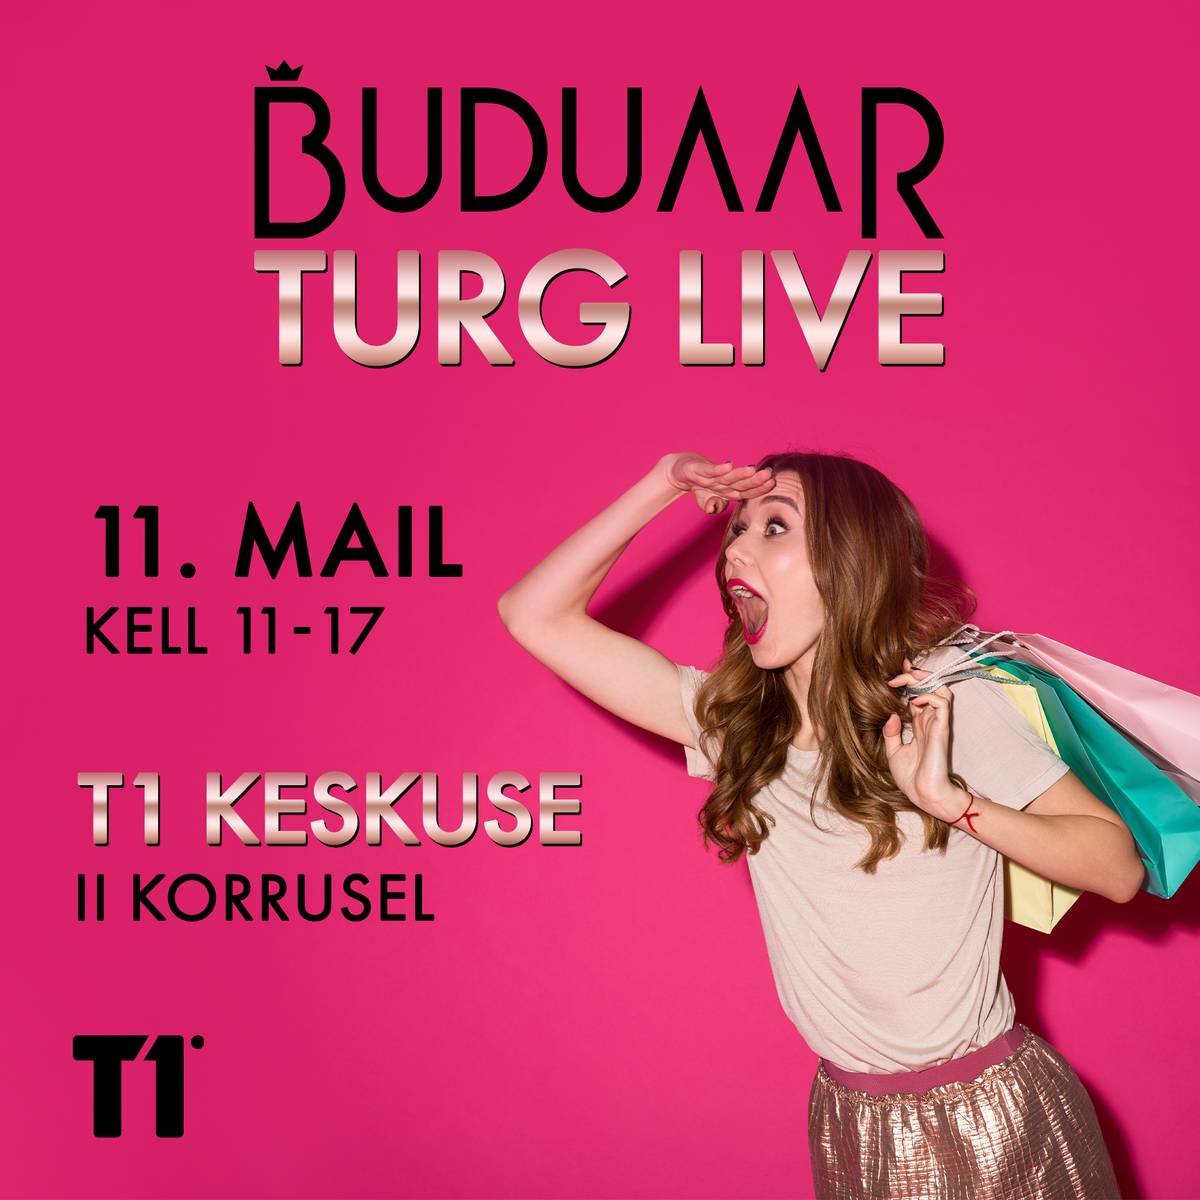 Buduaari LIVE turg